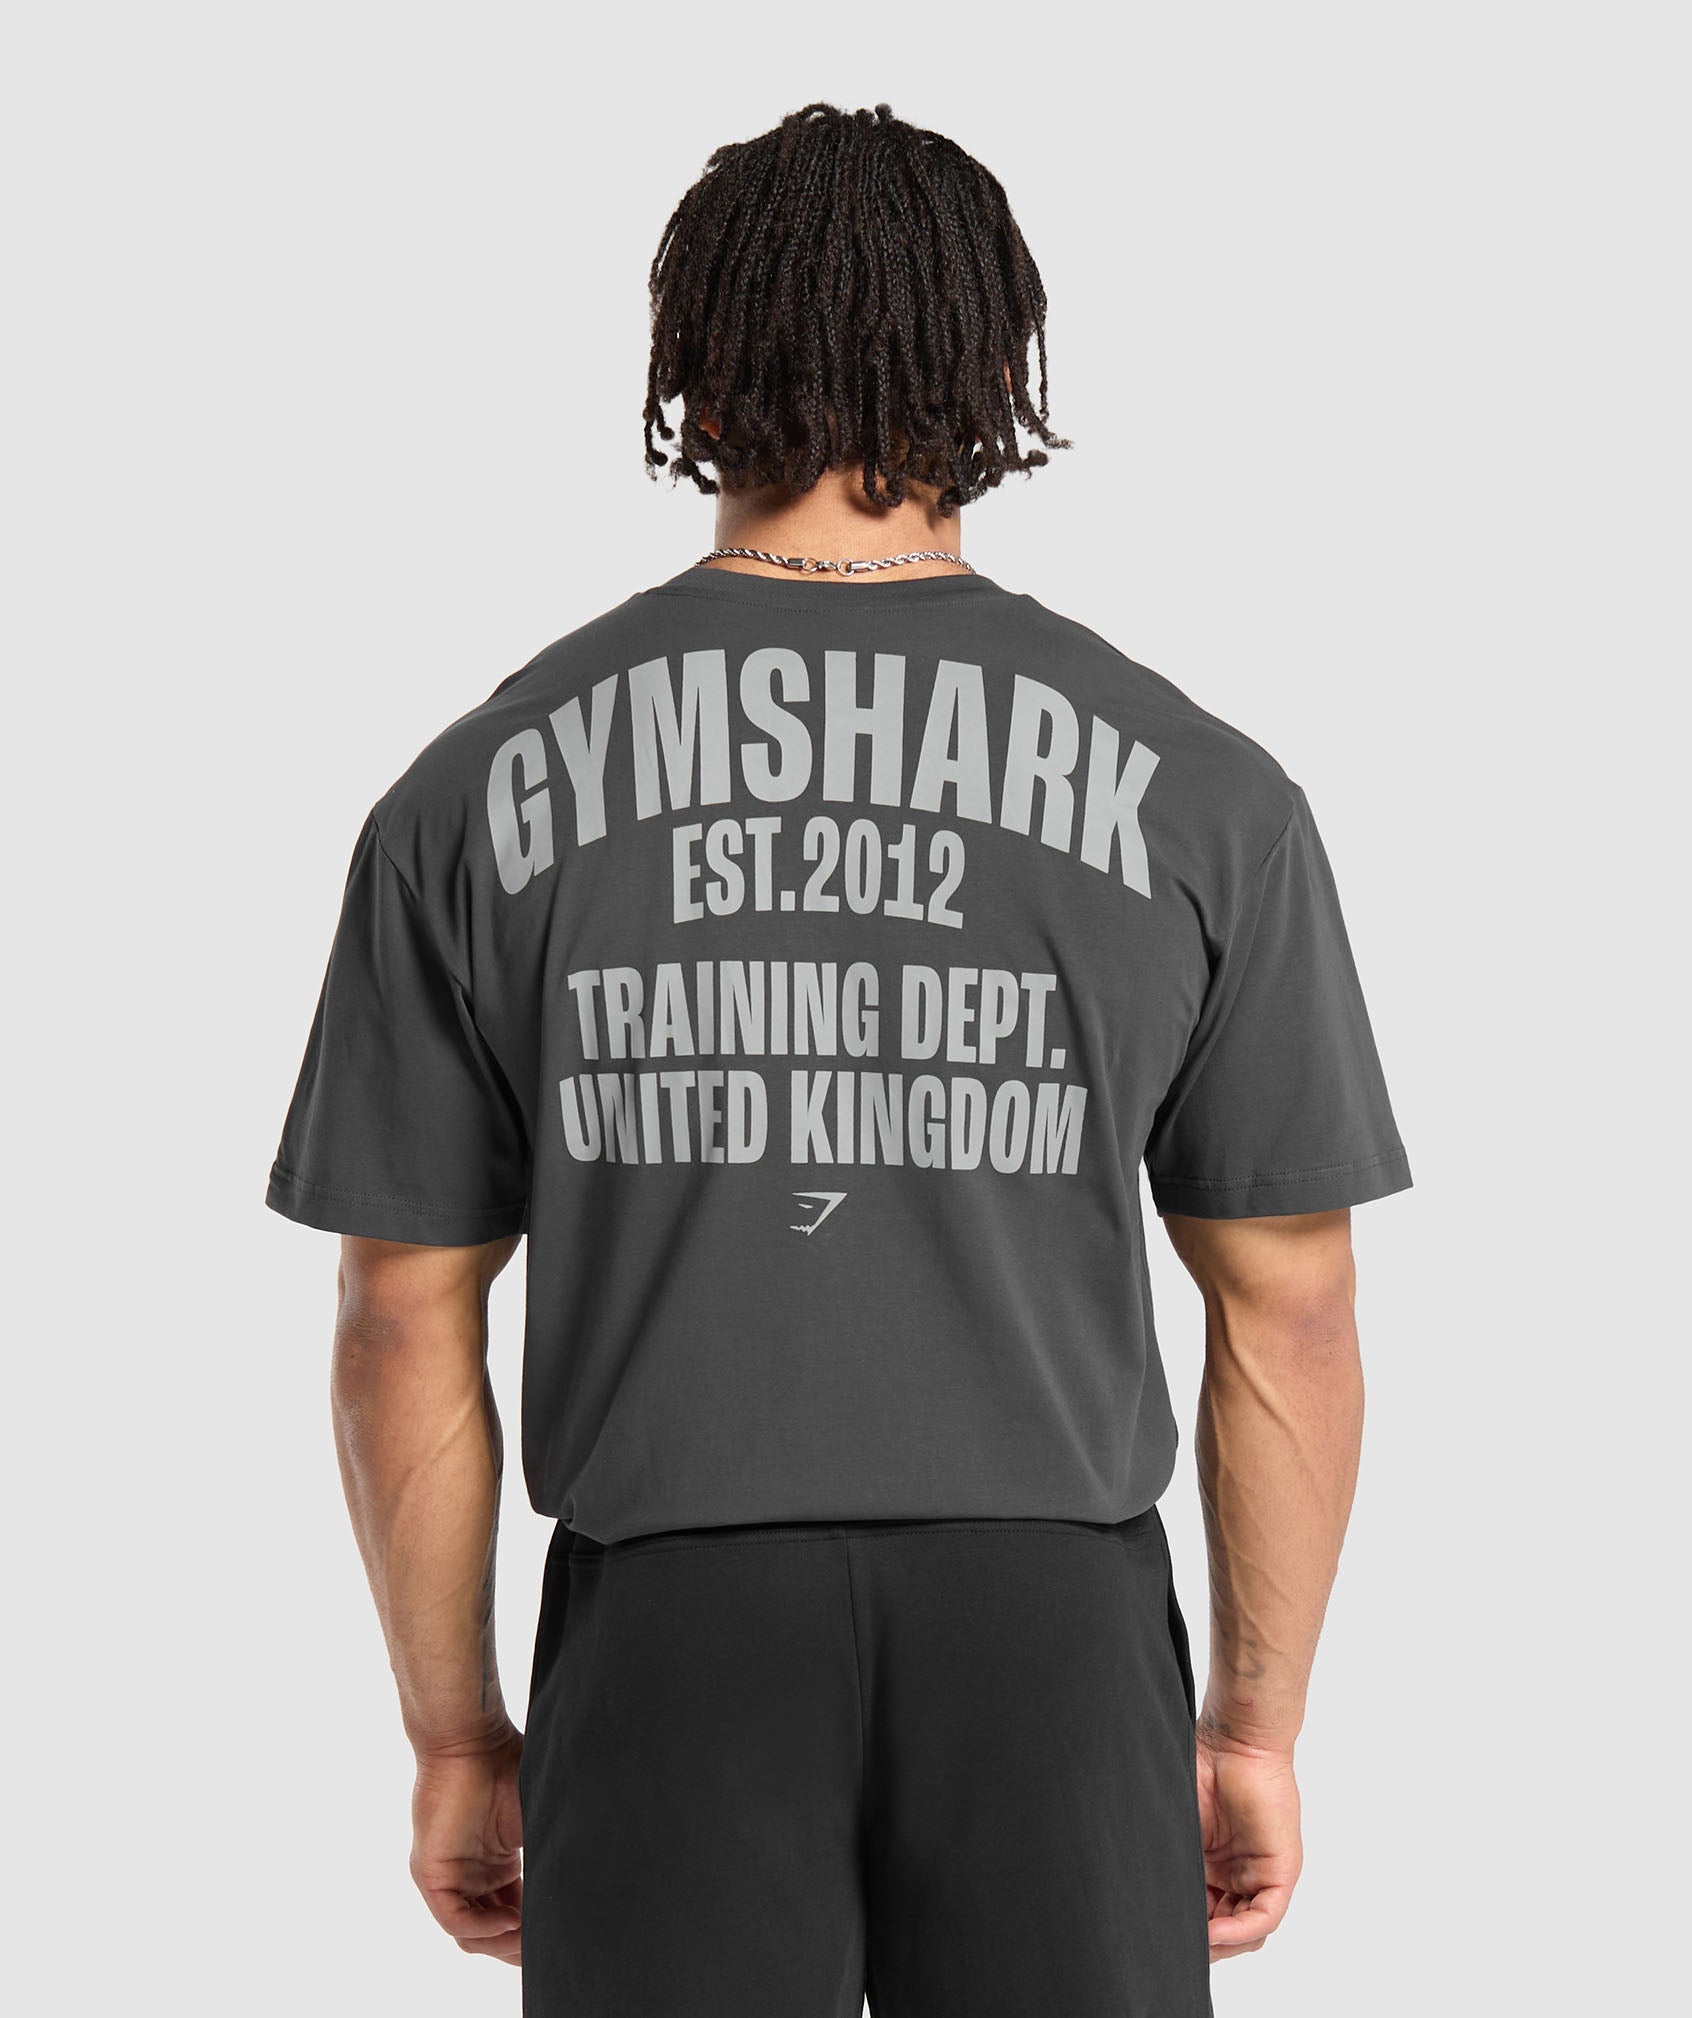 Training Dept. UK T-Shirt in Asphalt Grey